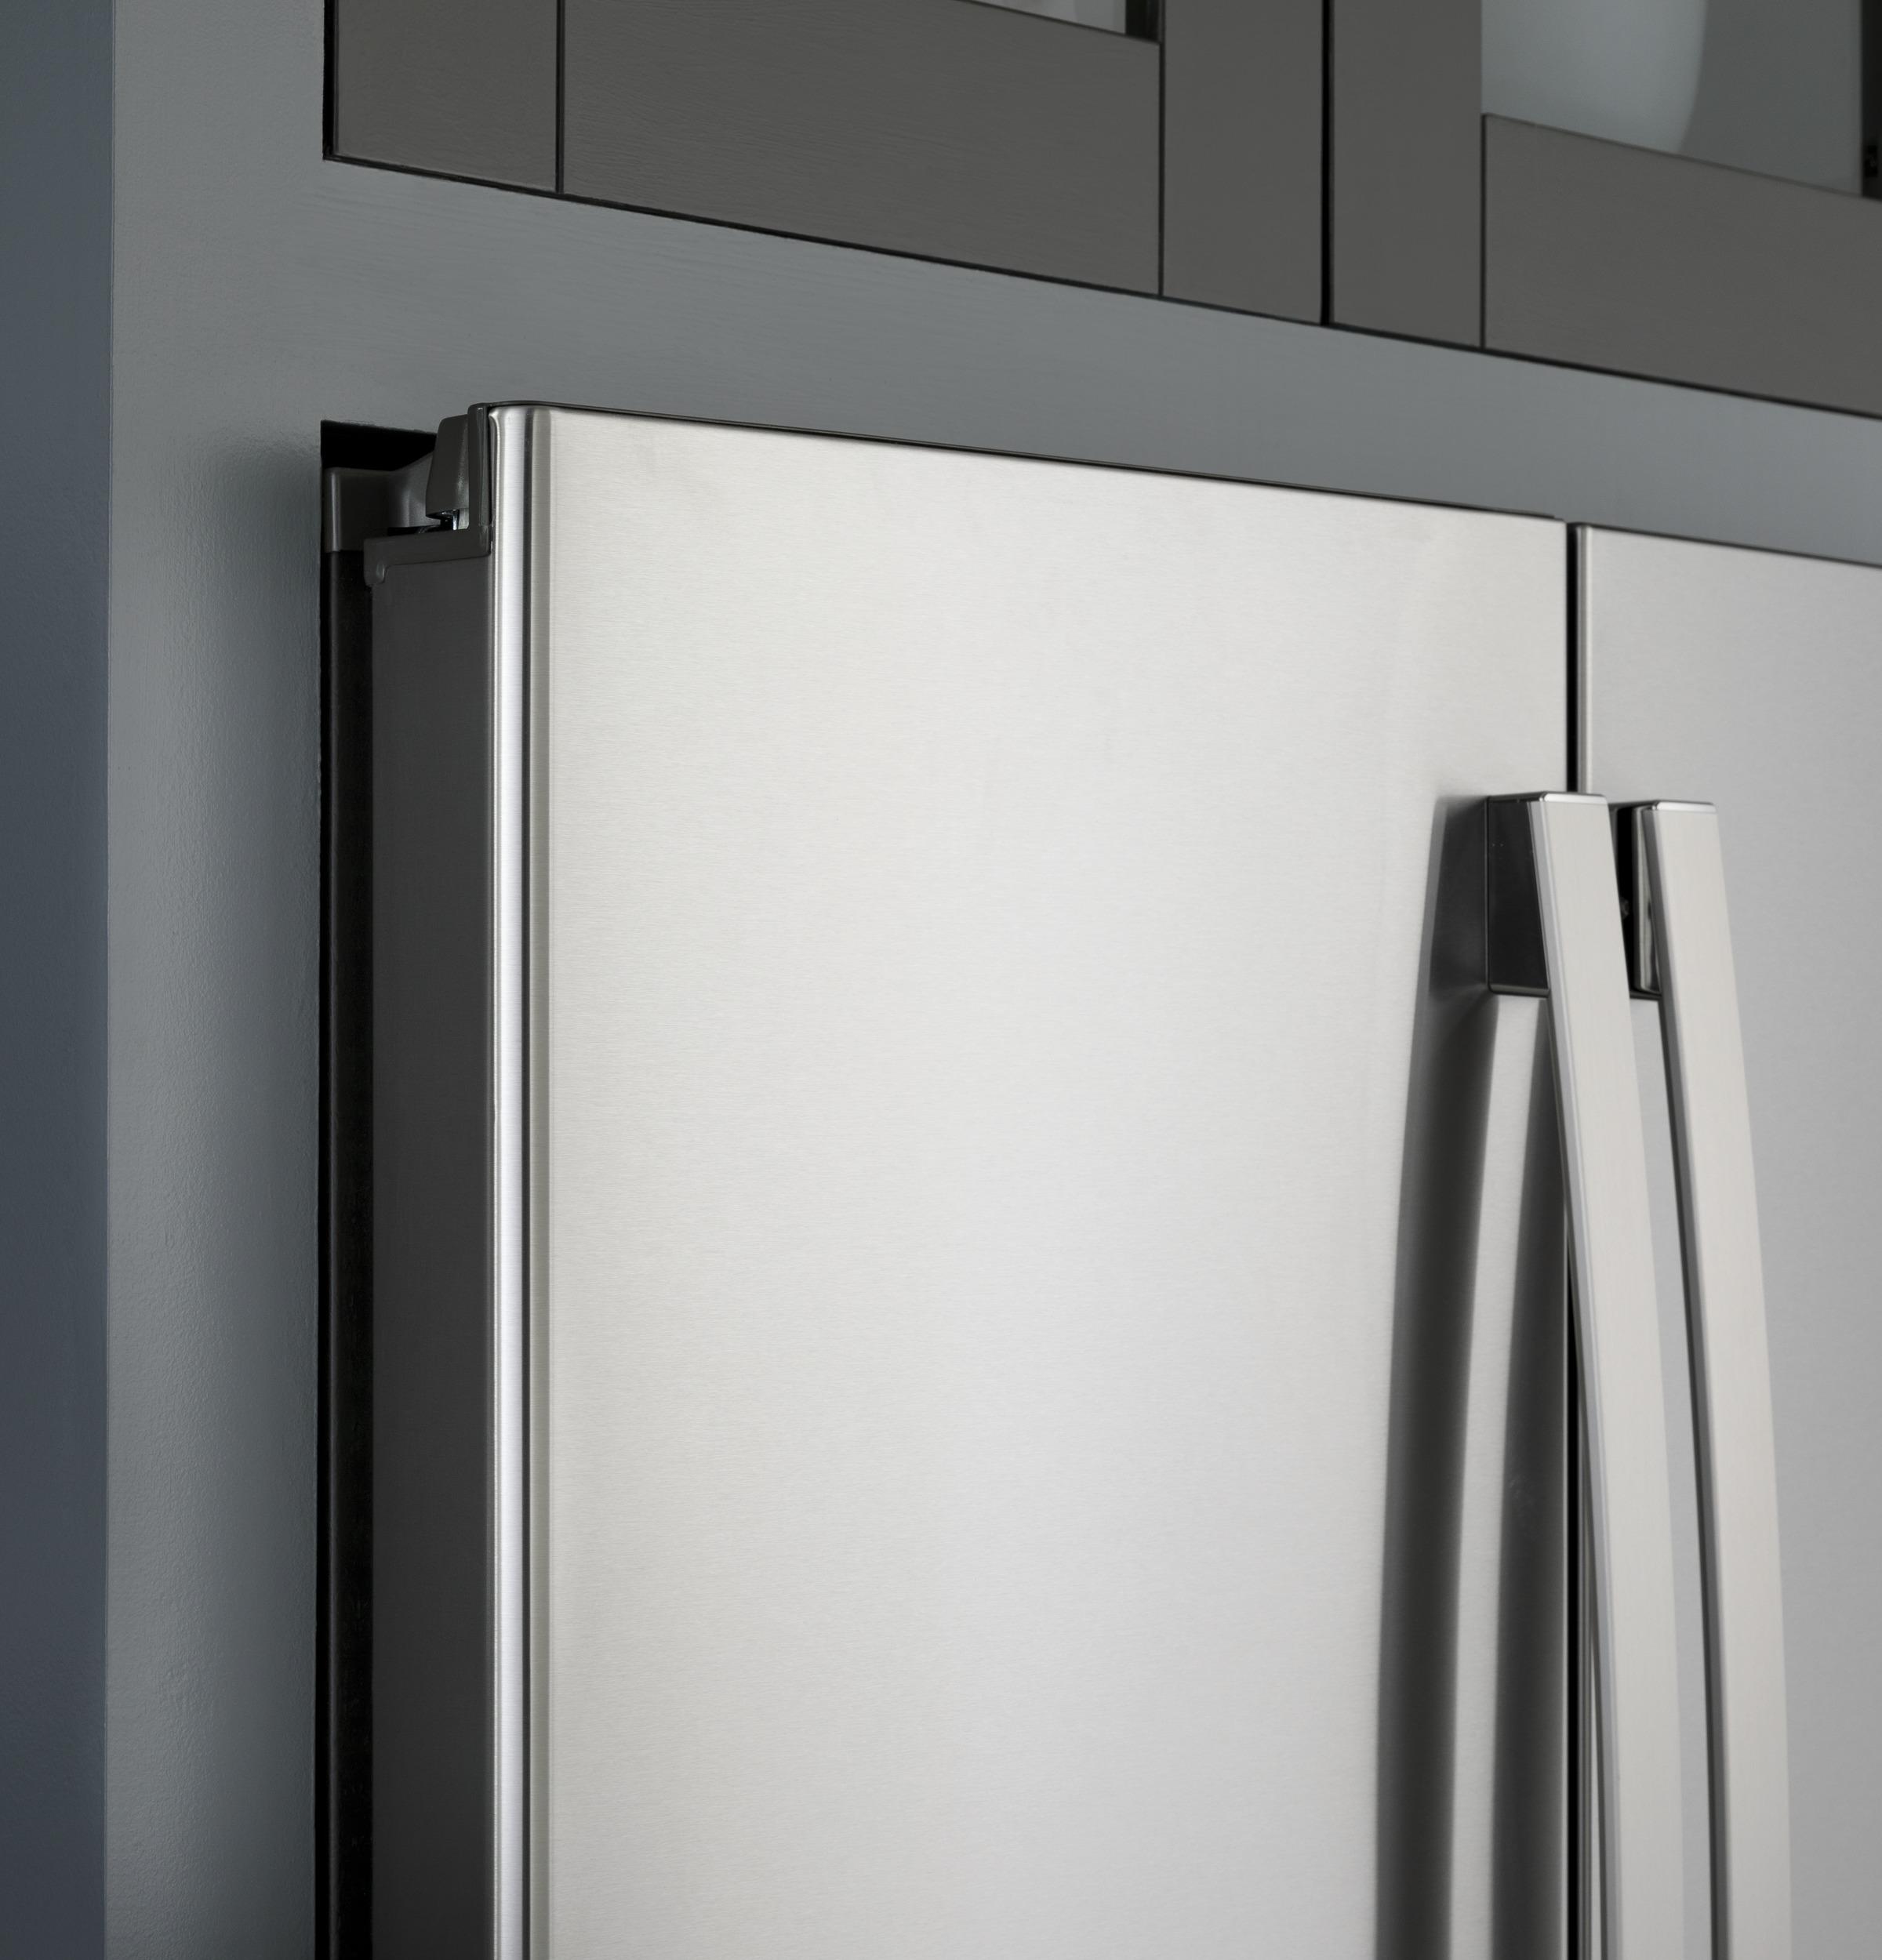 GE Profile™ ENERGY STAR® 23.1 Cu. Ft. Counter-Depth Fingerprint Resistant French-Door Refrigerator